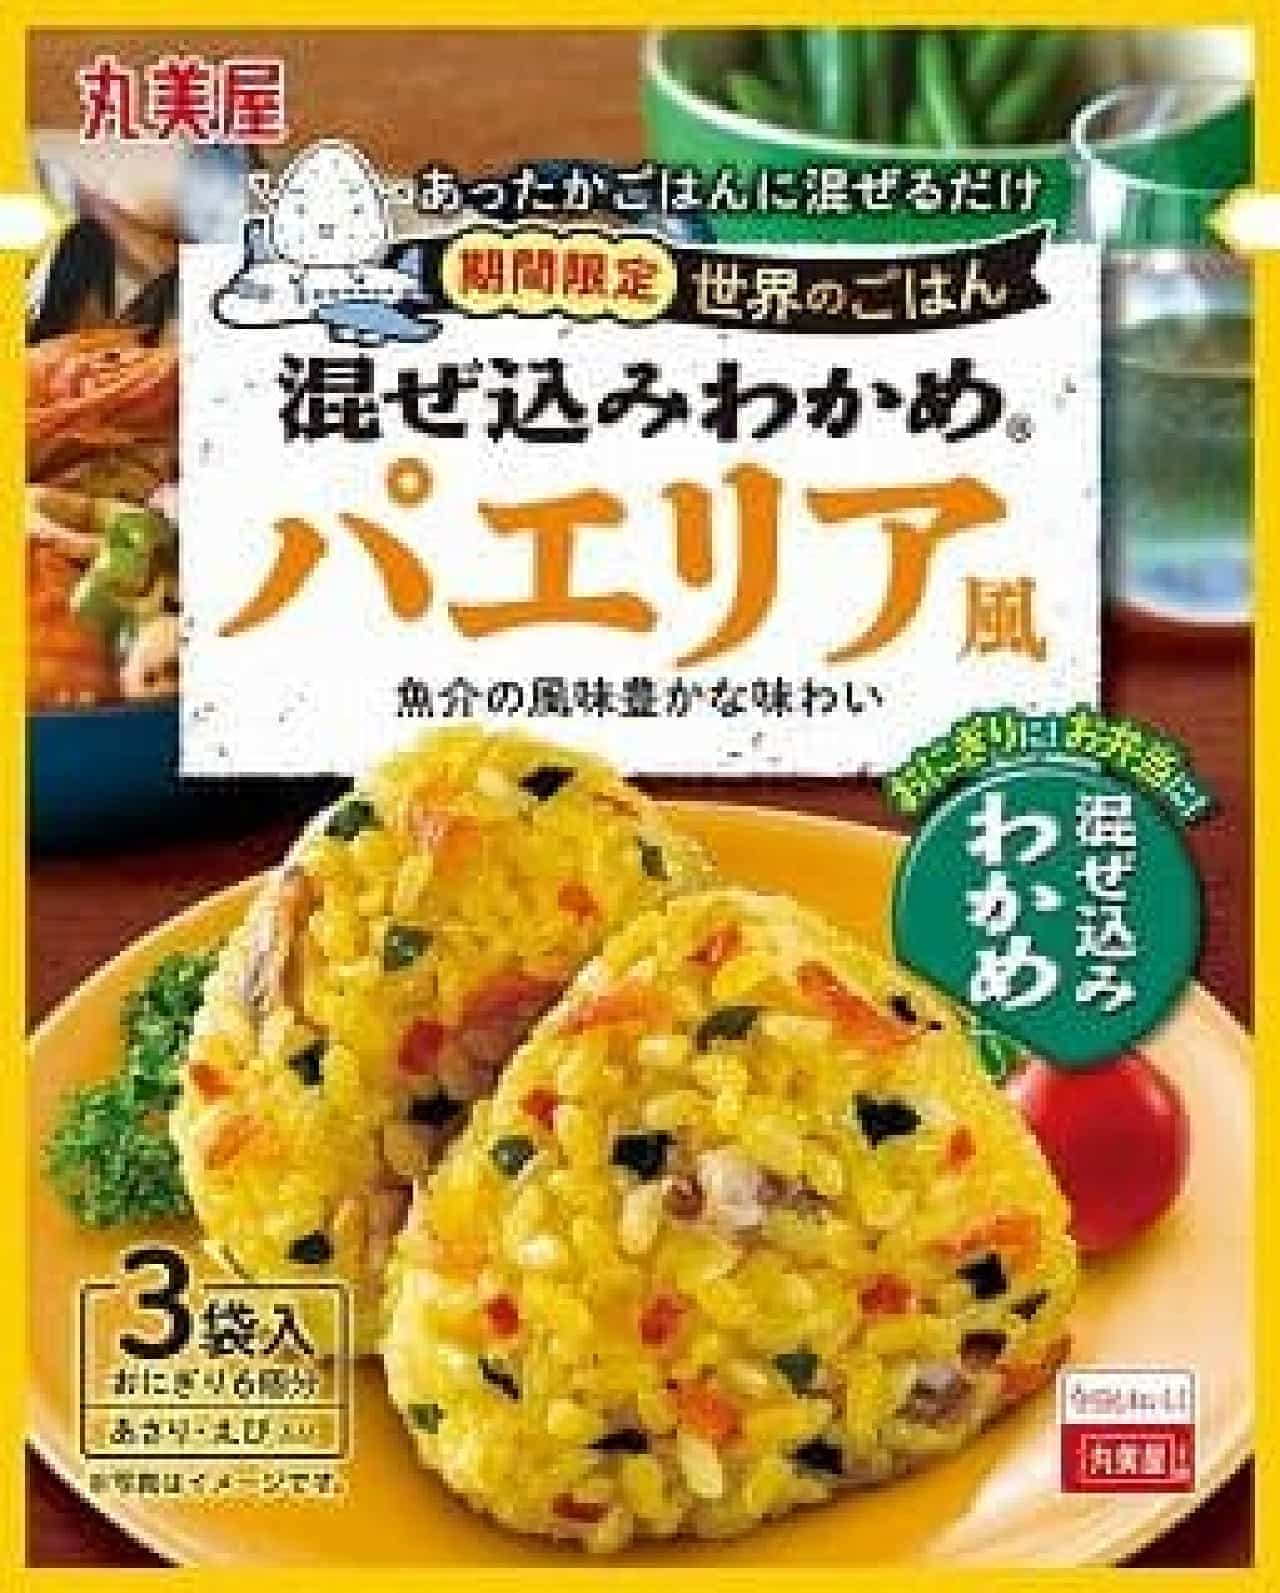 Marumiya Food Industry "Limited time mixed wakame seaweed world rice [paella style]"